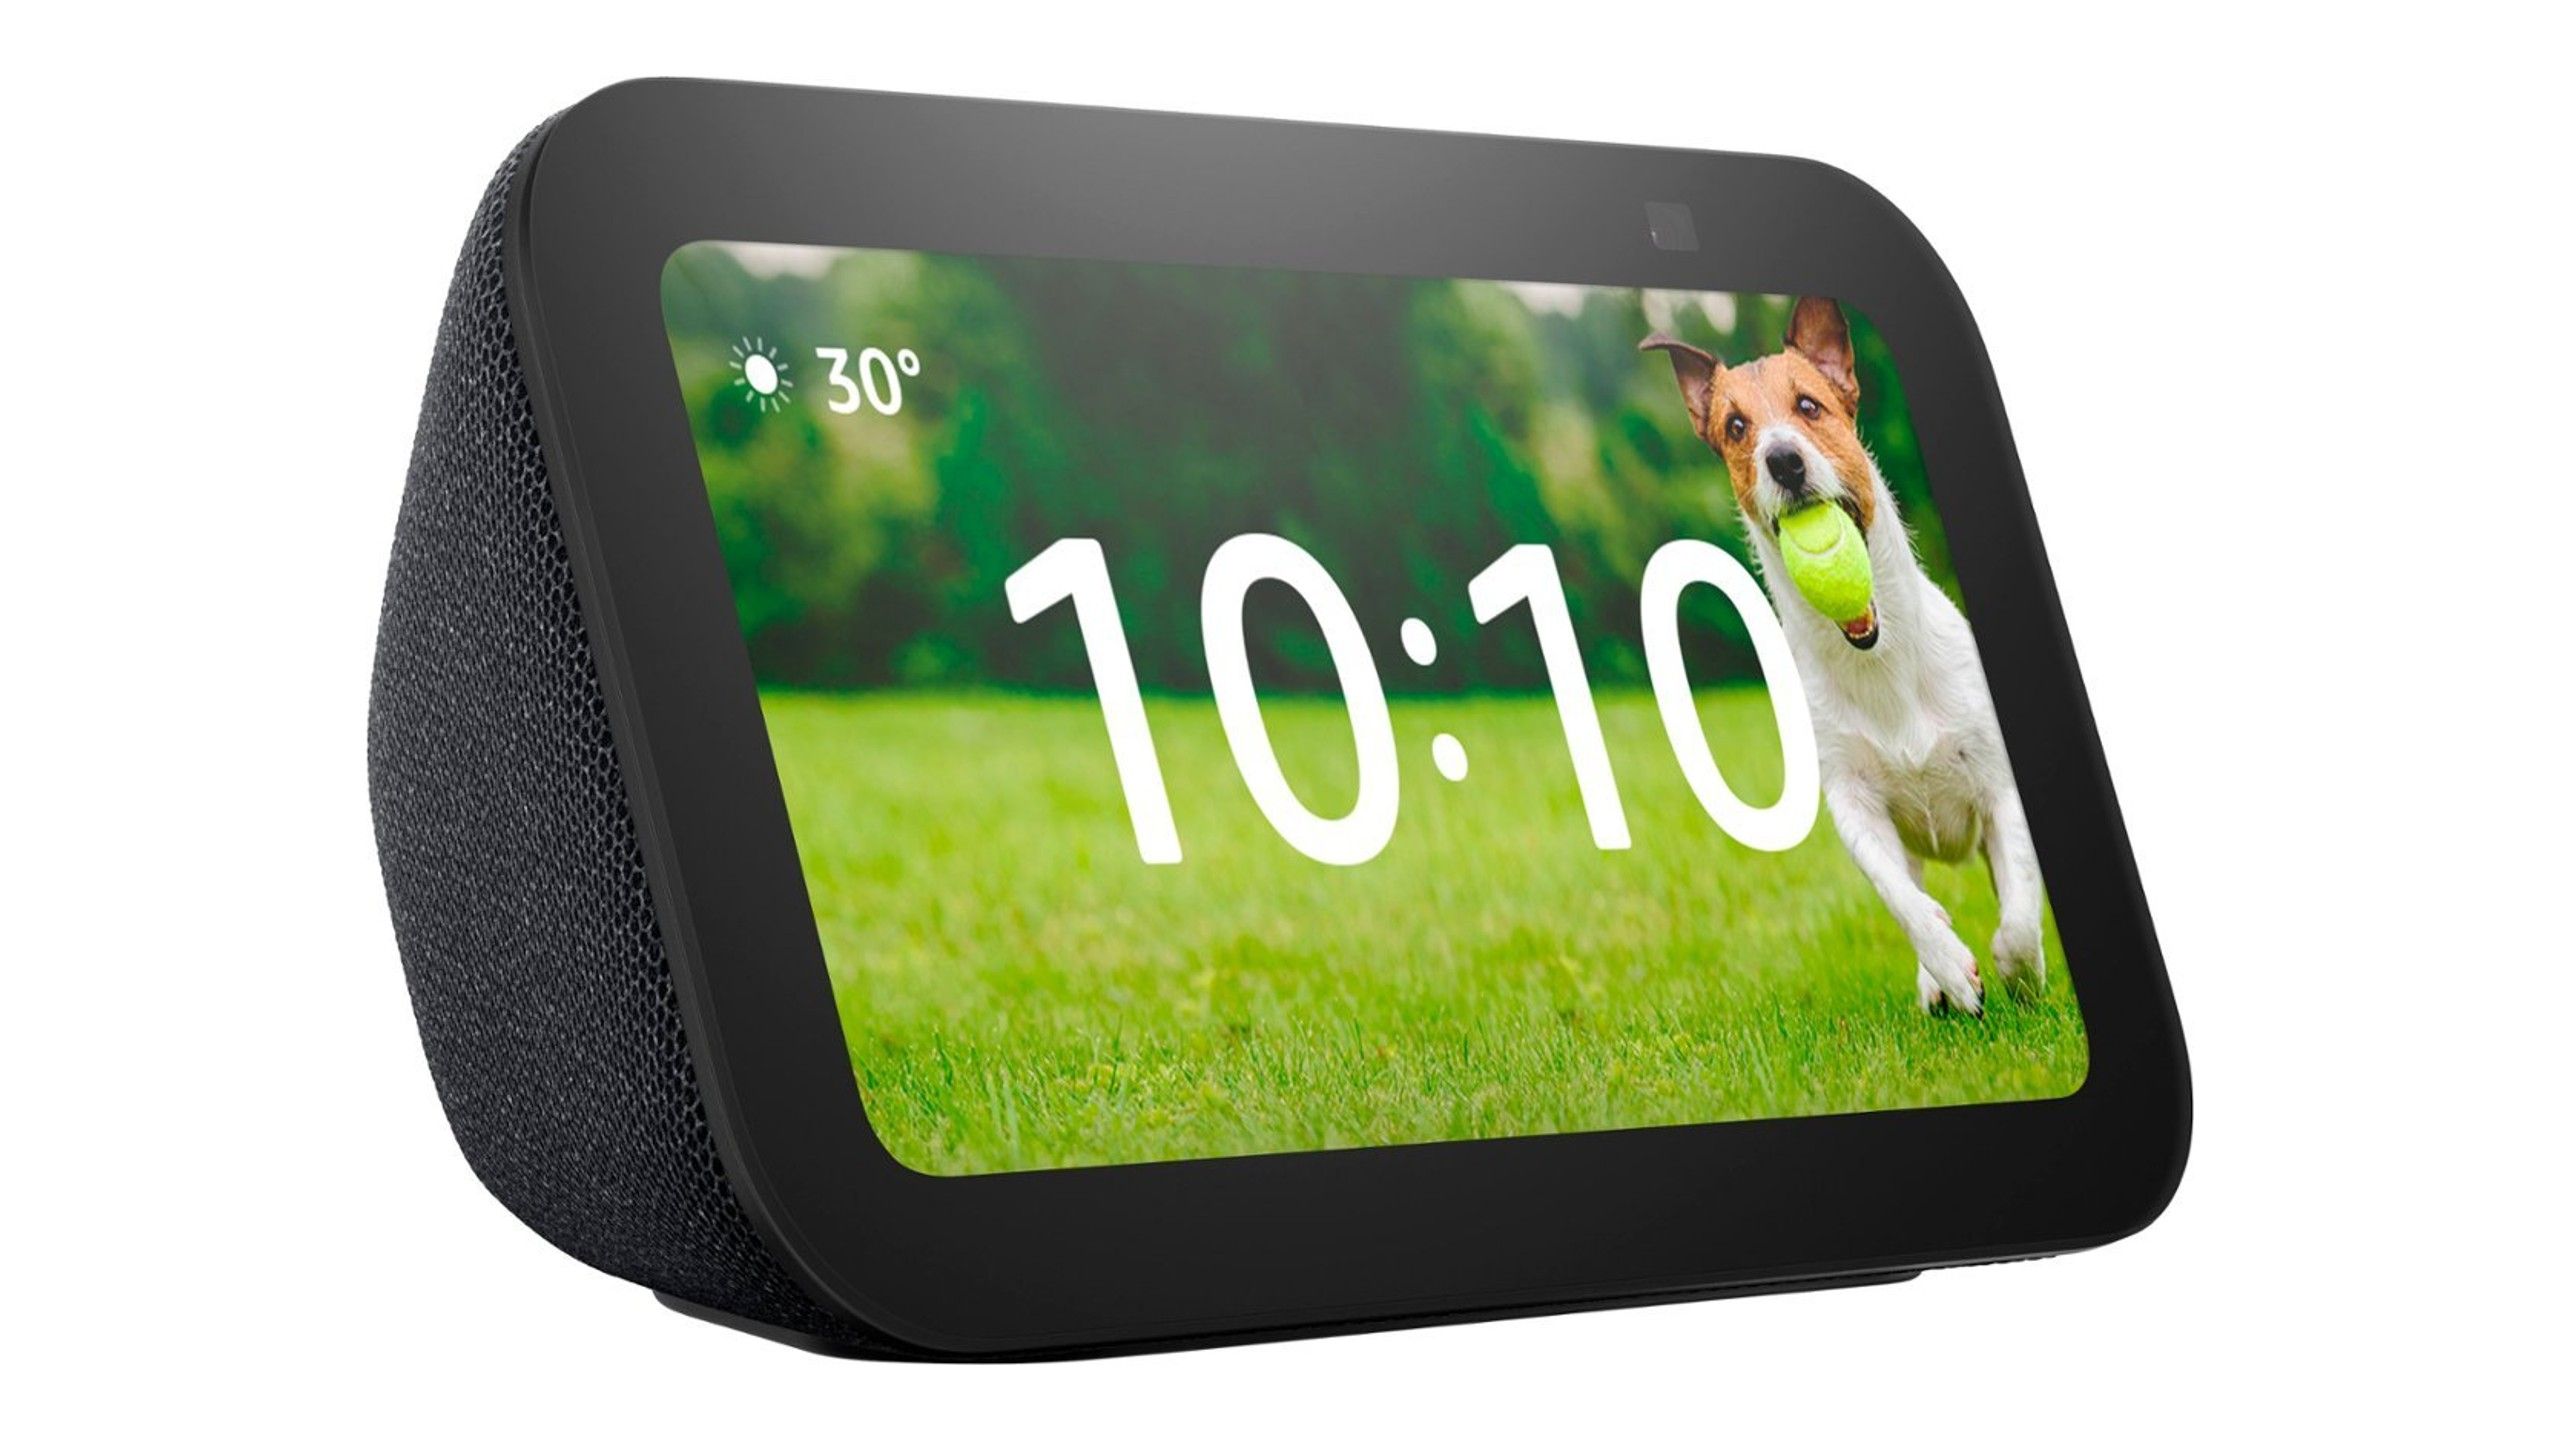 Echo Show - Smart display - LCD - 7-inch - wireless - Bluetooth,  Wi-Fi - white